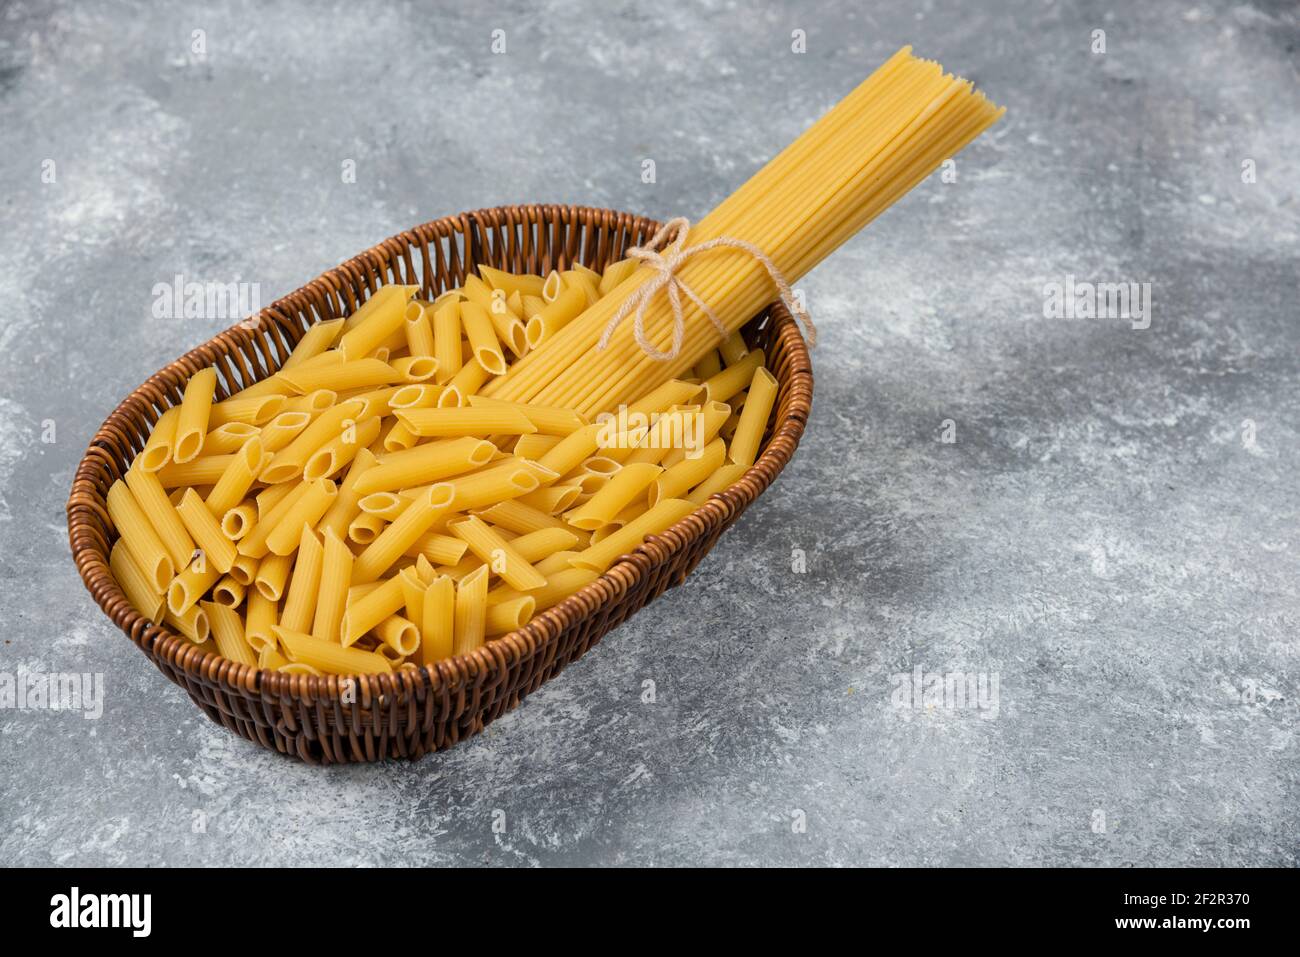 Korbkorb mit rohen Spaghetti und Penne Pasta auf Marmor Oberfläche Stockfoto